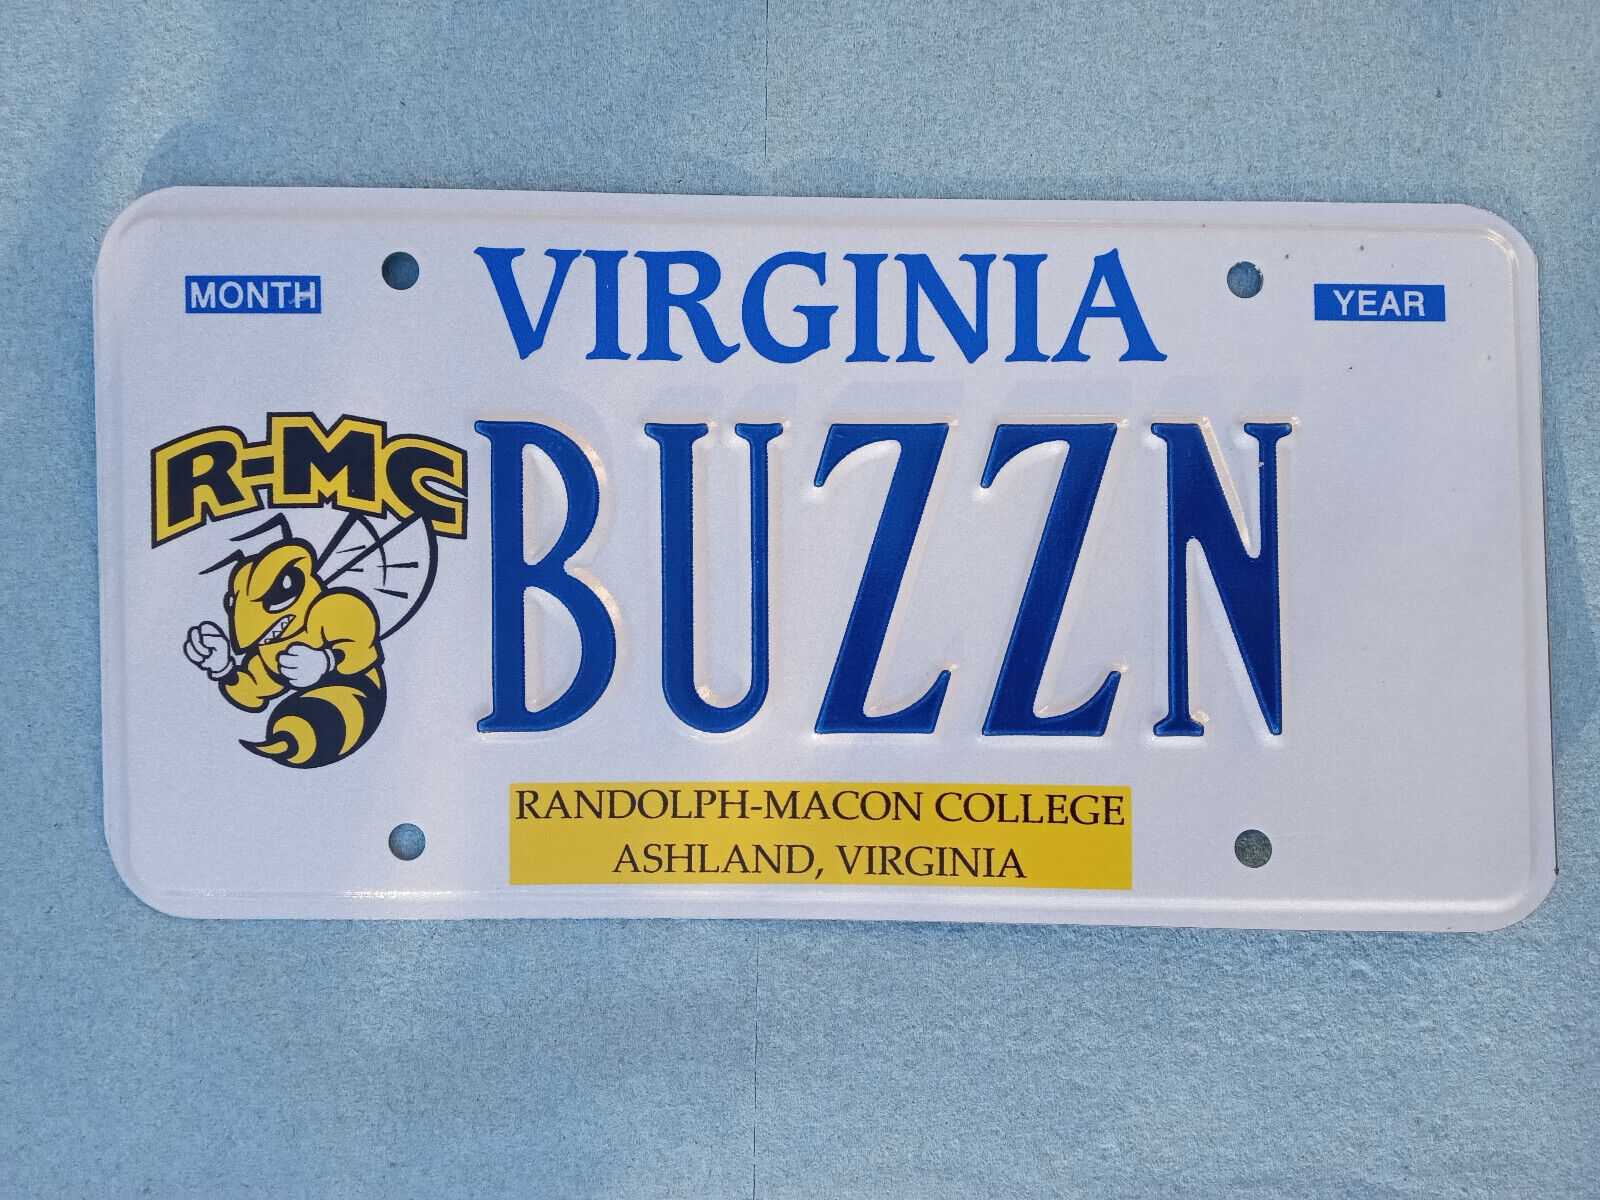 Expired Va DMV Virginia Issued Va License Plate Randolph Macon College Buzzn Bee